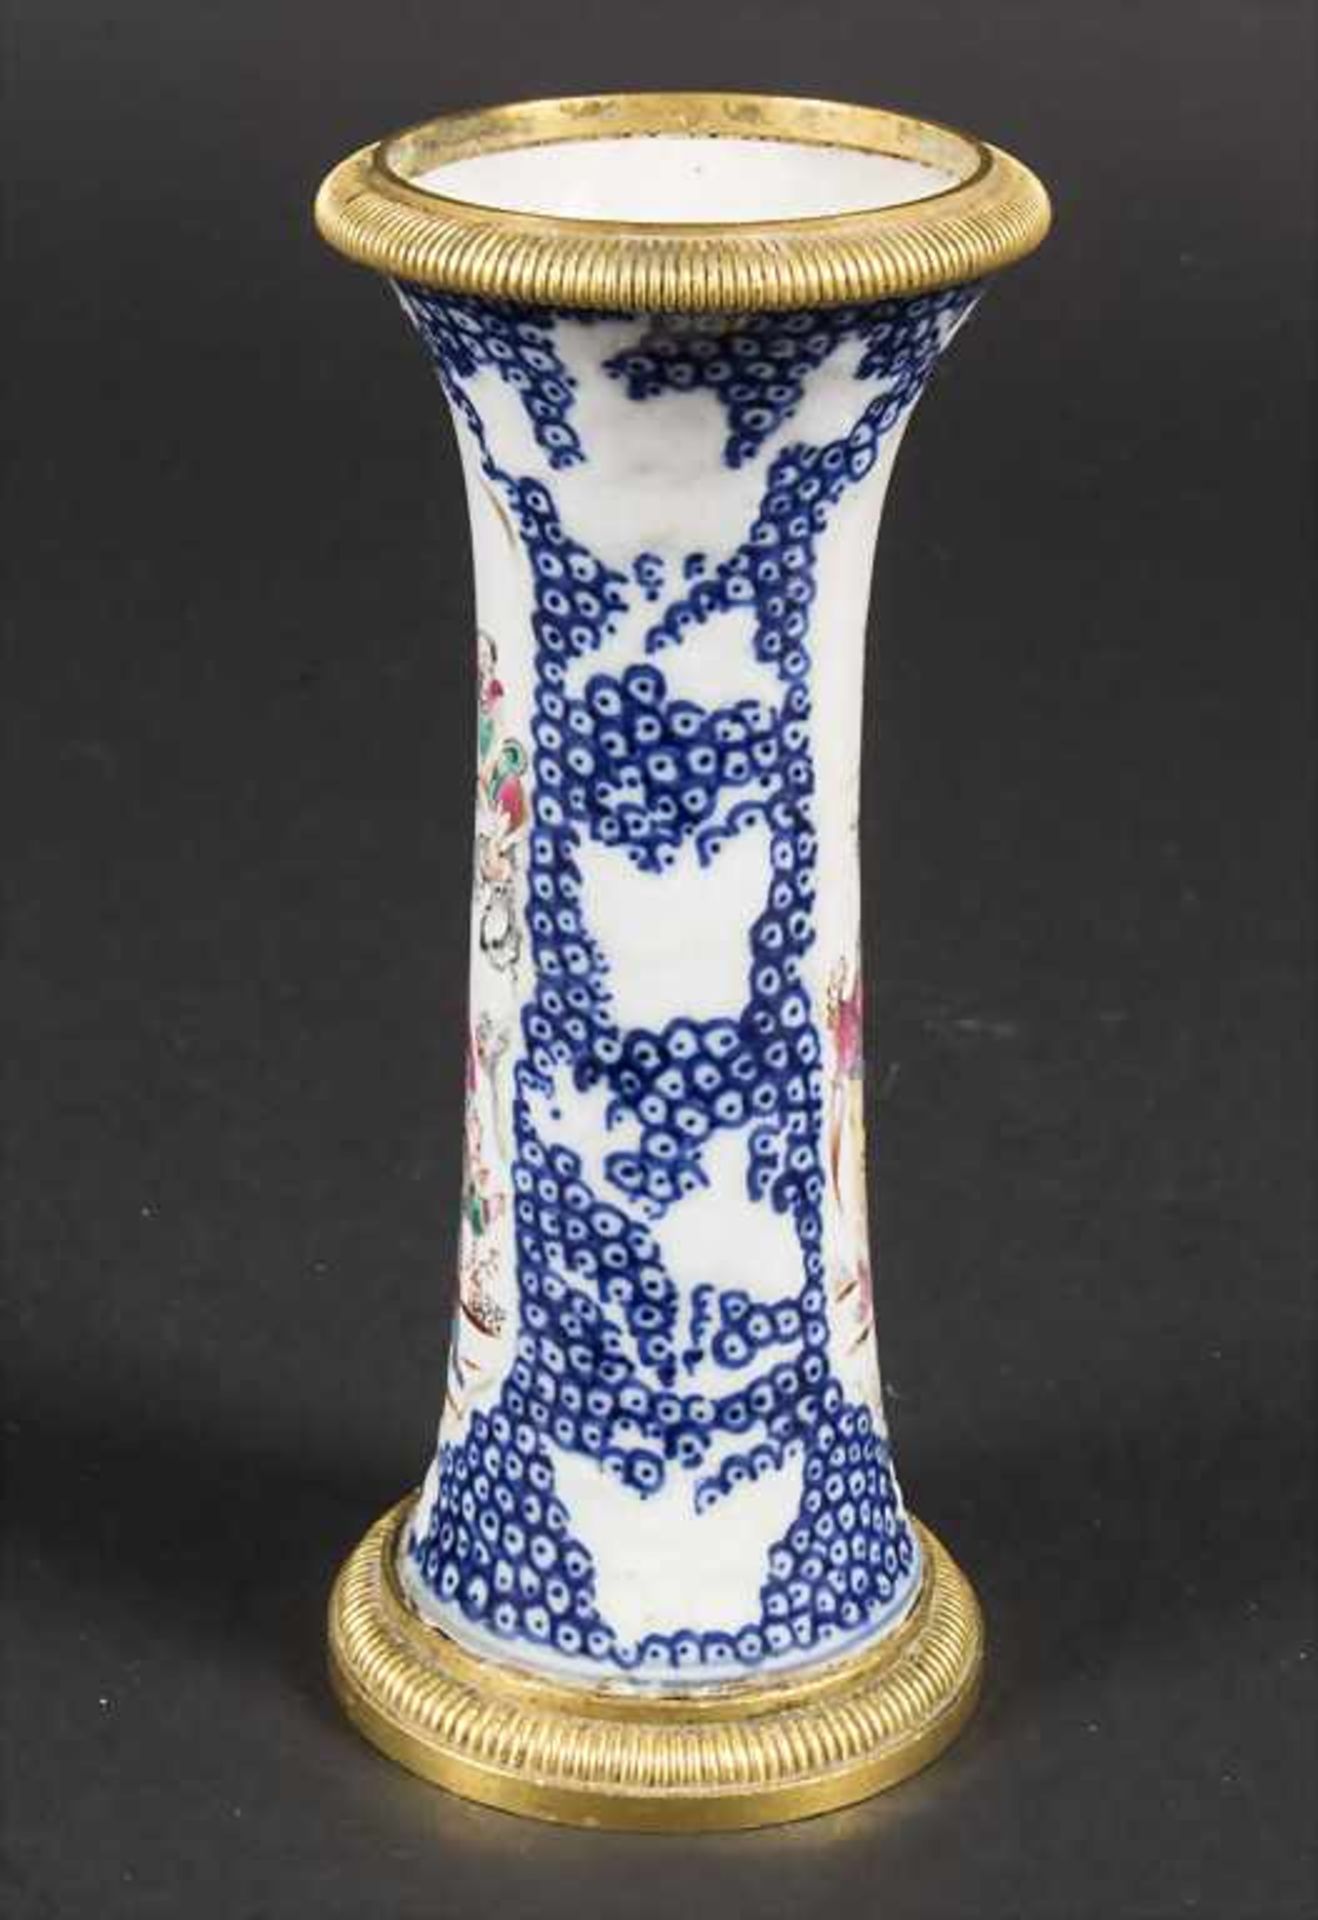 Ziervase / A decorative porcelain vase, China, Qing Dynastie (1644-1911), 18. Jh. - Image 2 of 9